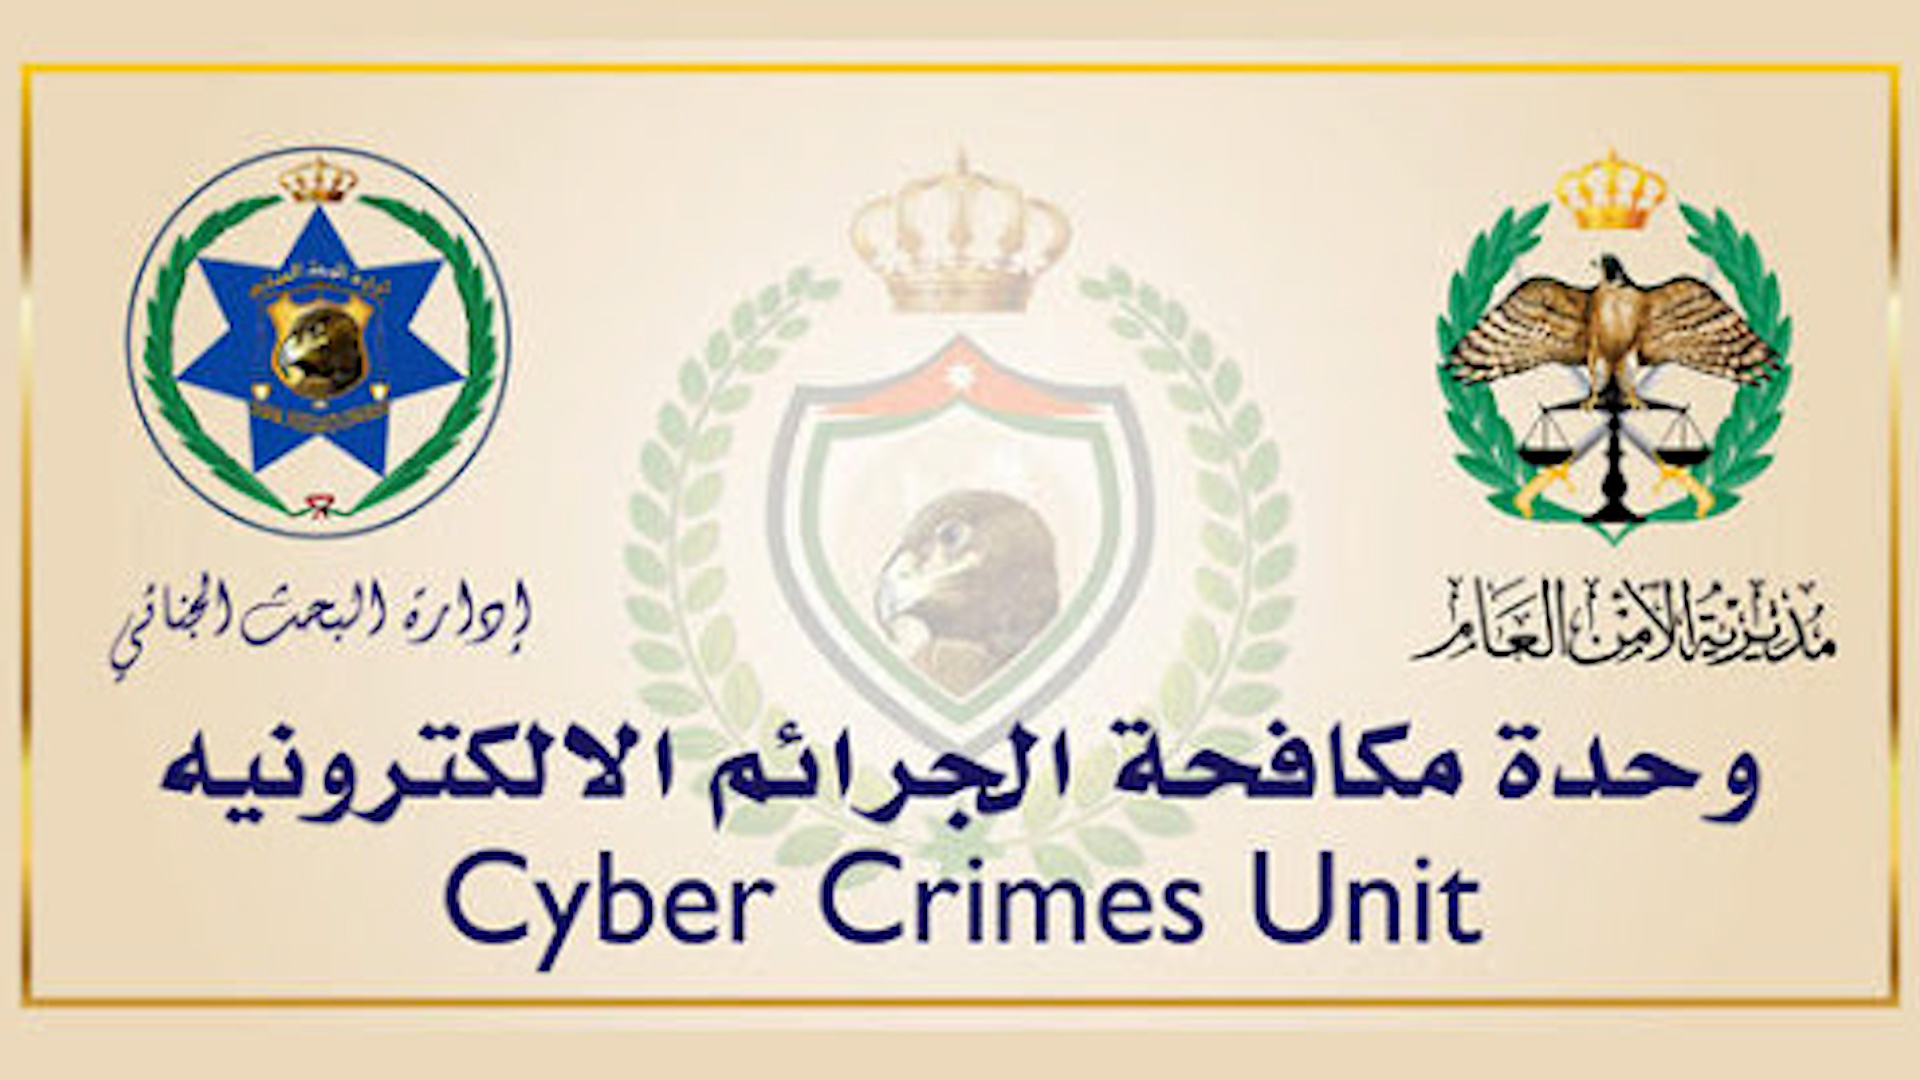 Jordanian Cyber Crimes Unit logo (source: petra.gov.jo)